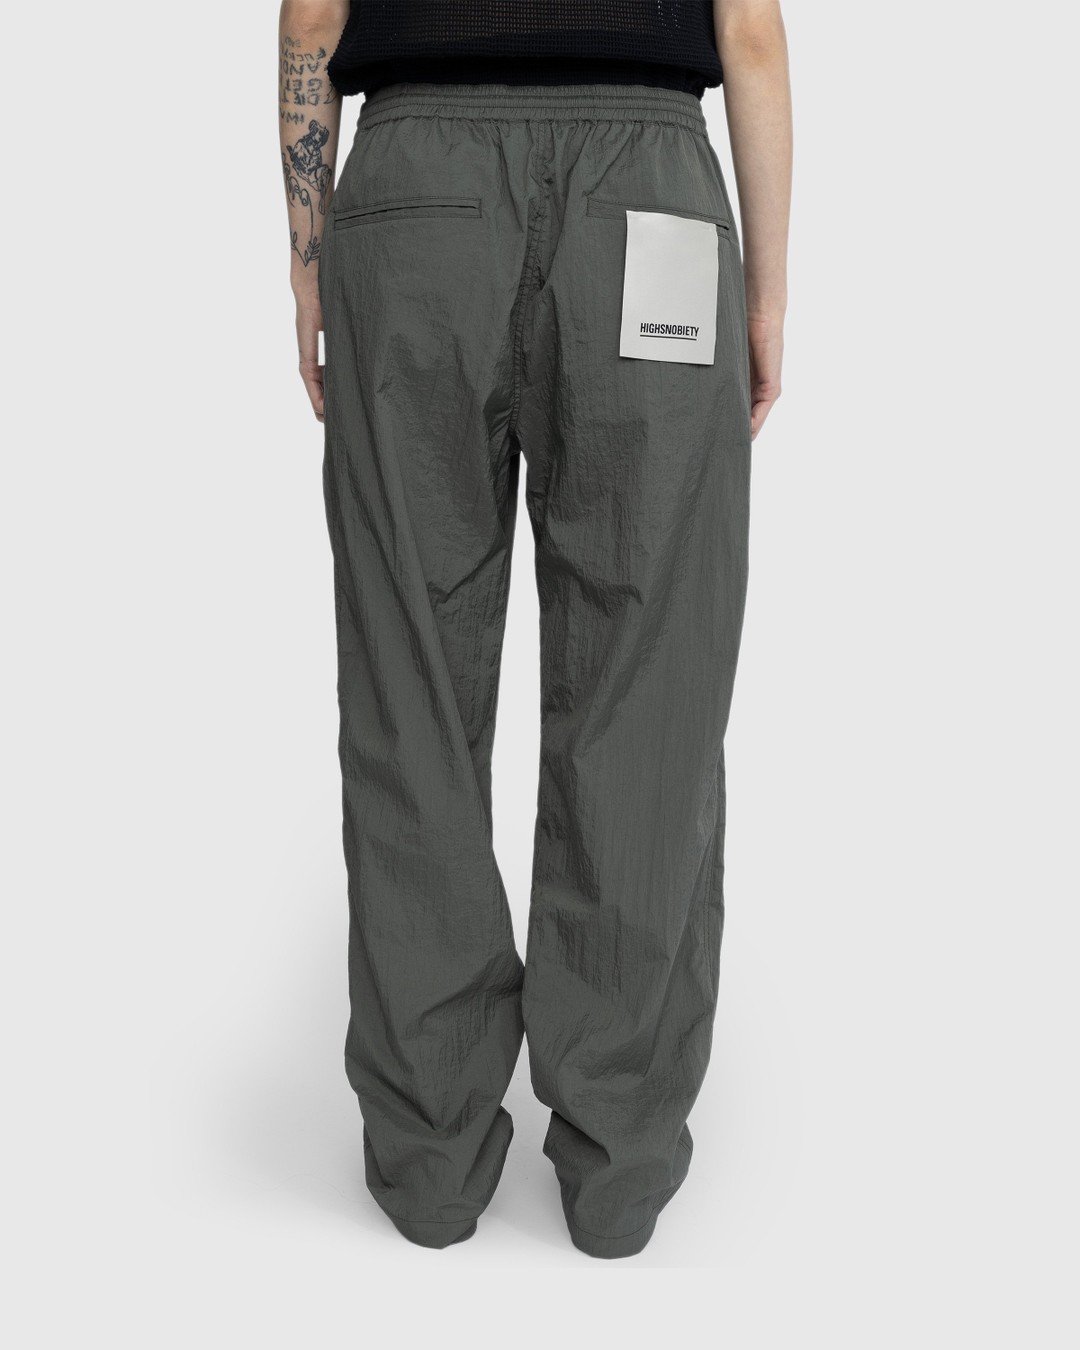 Highsnobiety – Texture Nylon Pants Grey - Pants - Grey - Image 3